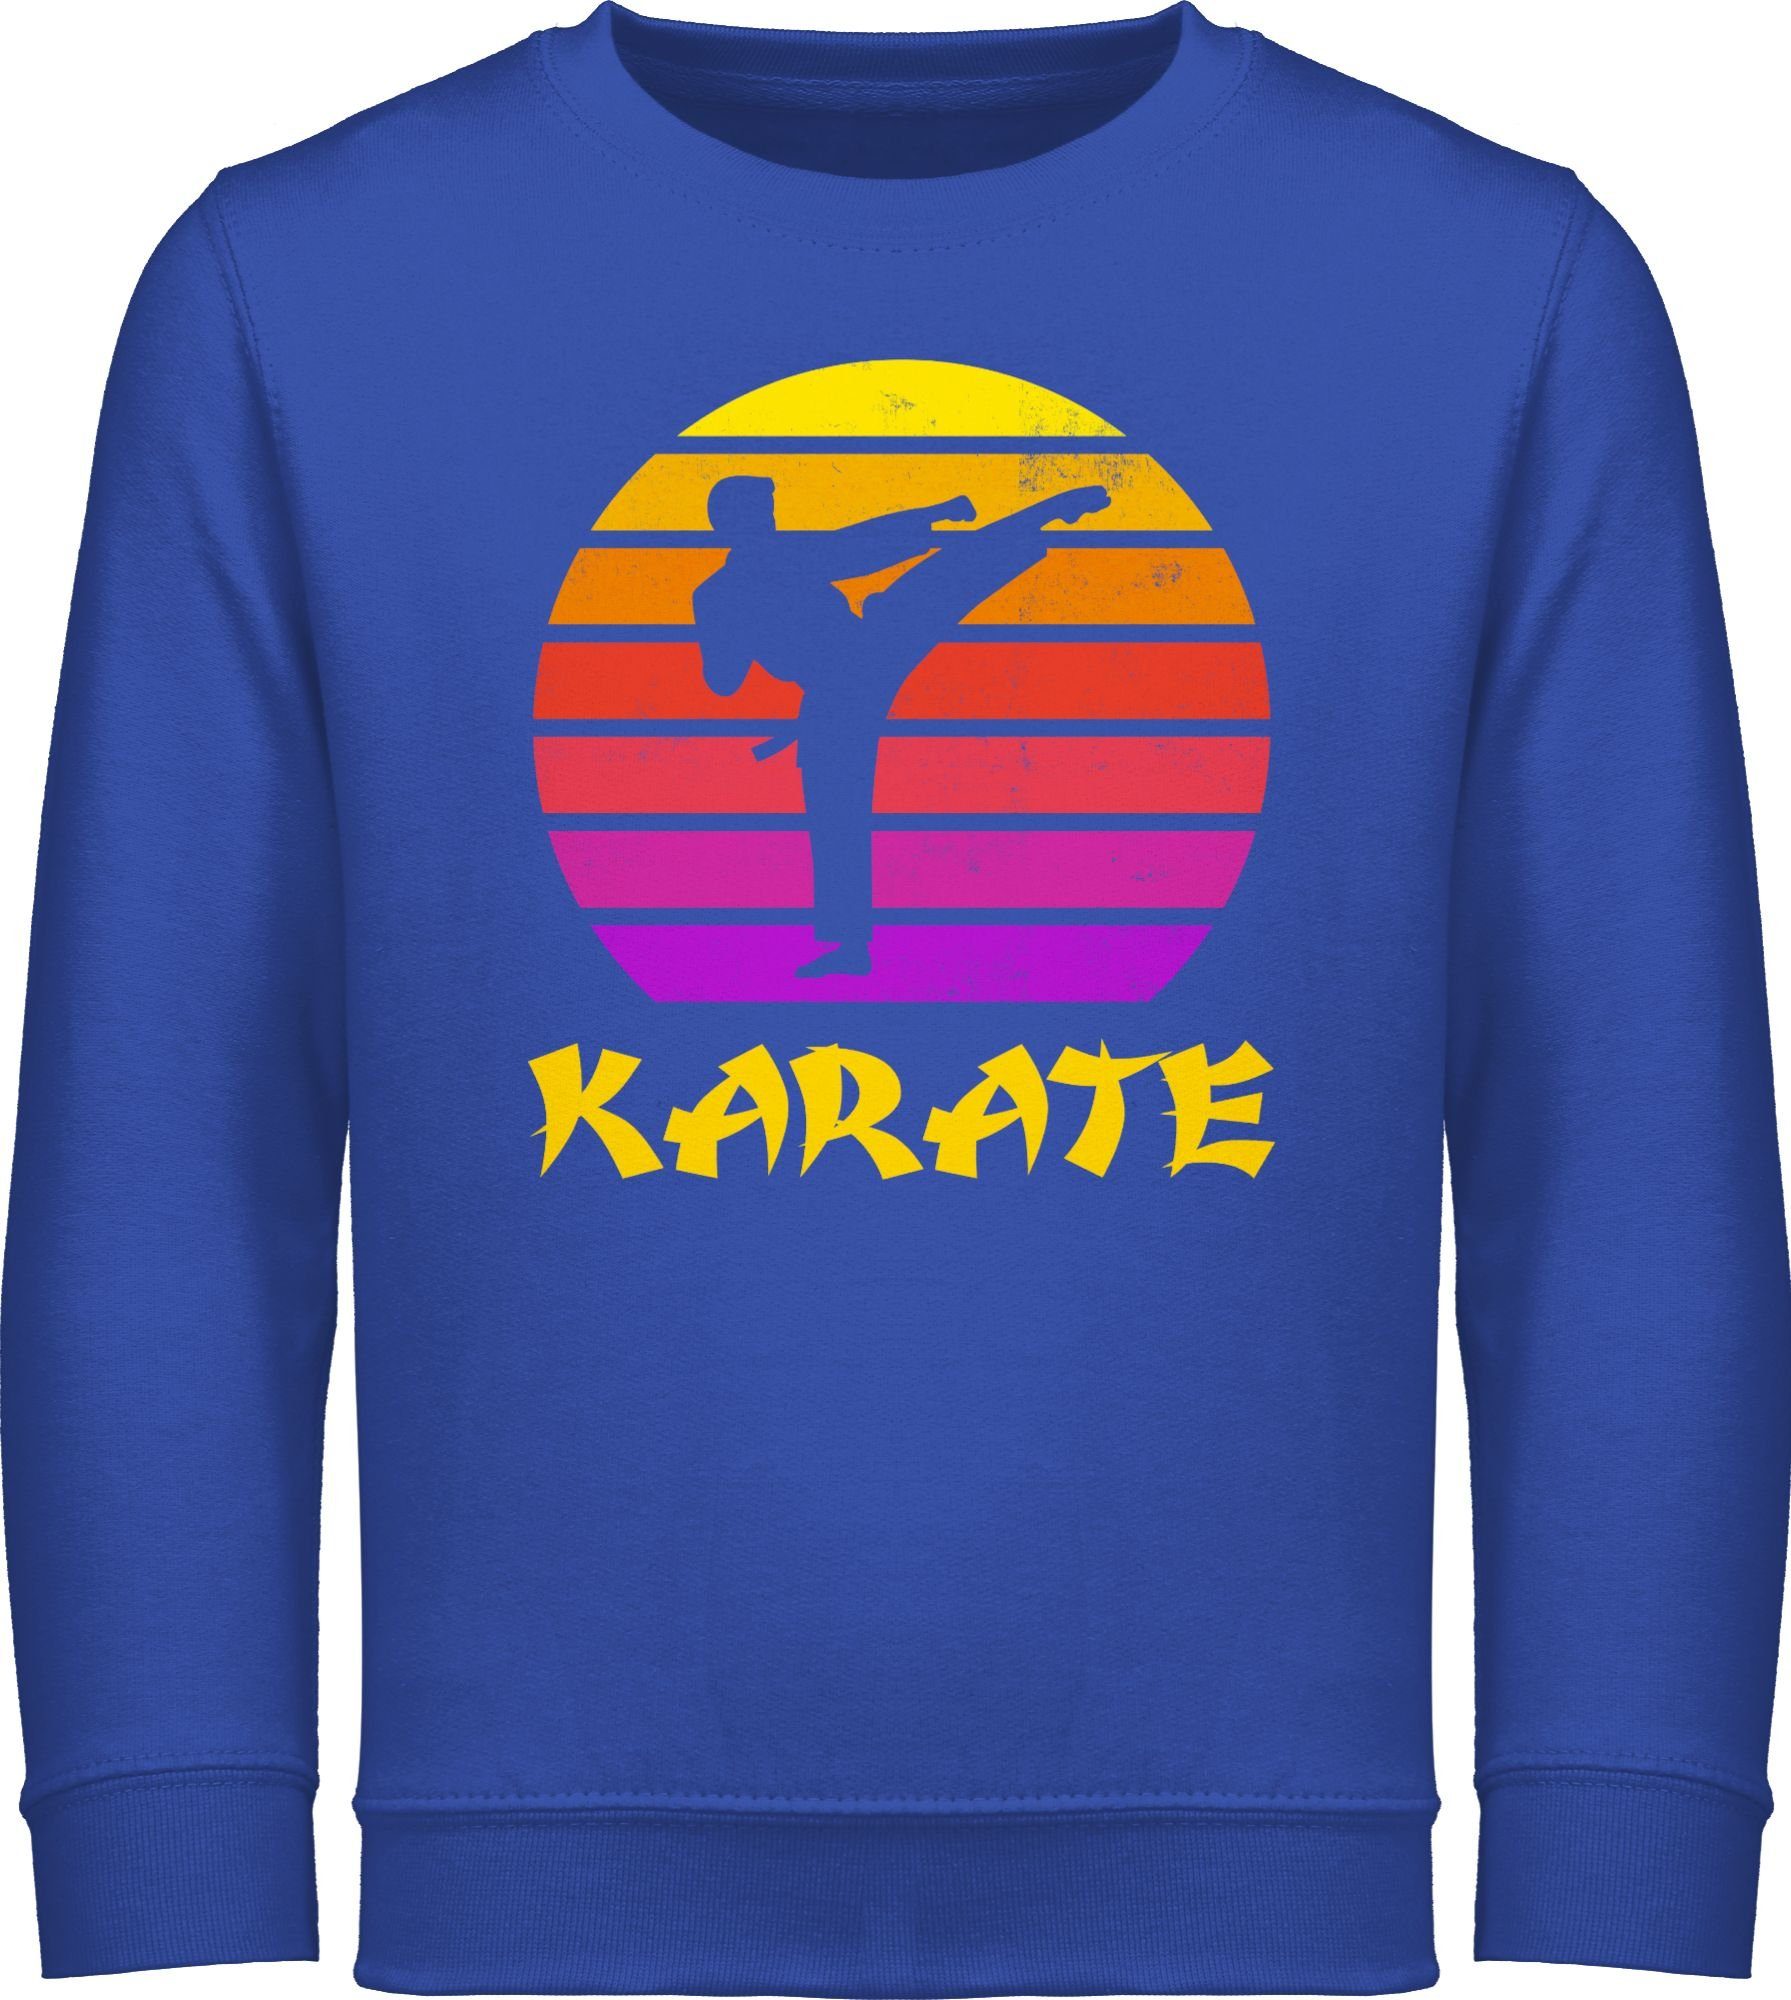 Shirtracer Sweatshirt Karate Retro Sonne Kinder Sport Kleidung 3 Royalblau